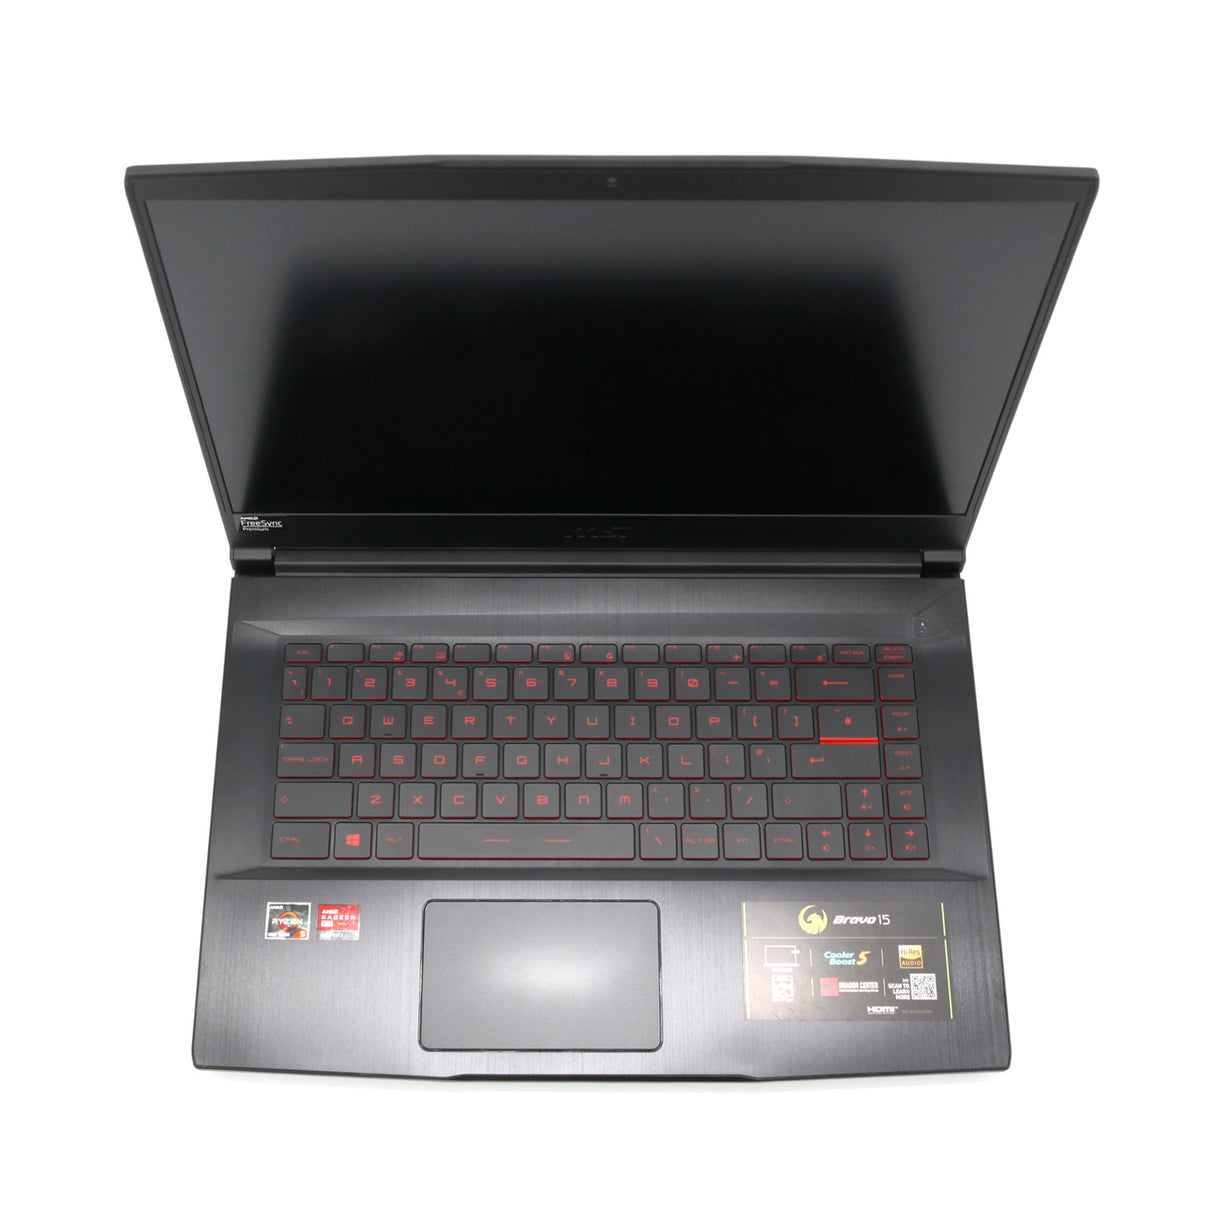 MSI Bravo 15 144Hz Gaming Laptop: Ryzen 5 4600H, 8GB, 256GB, RX 5500M, Warranty - GreenGreenStoreUK